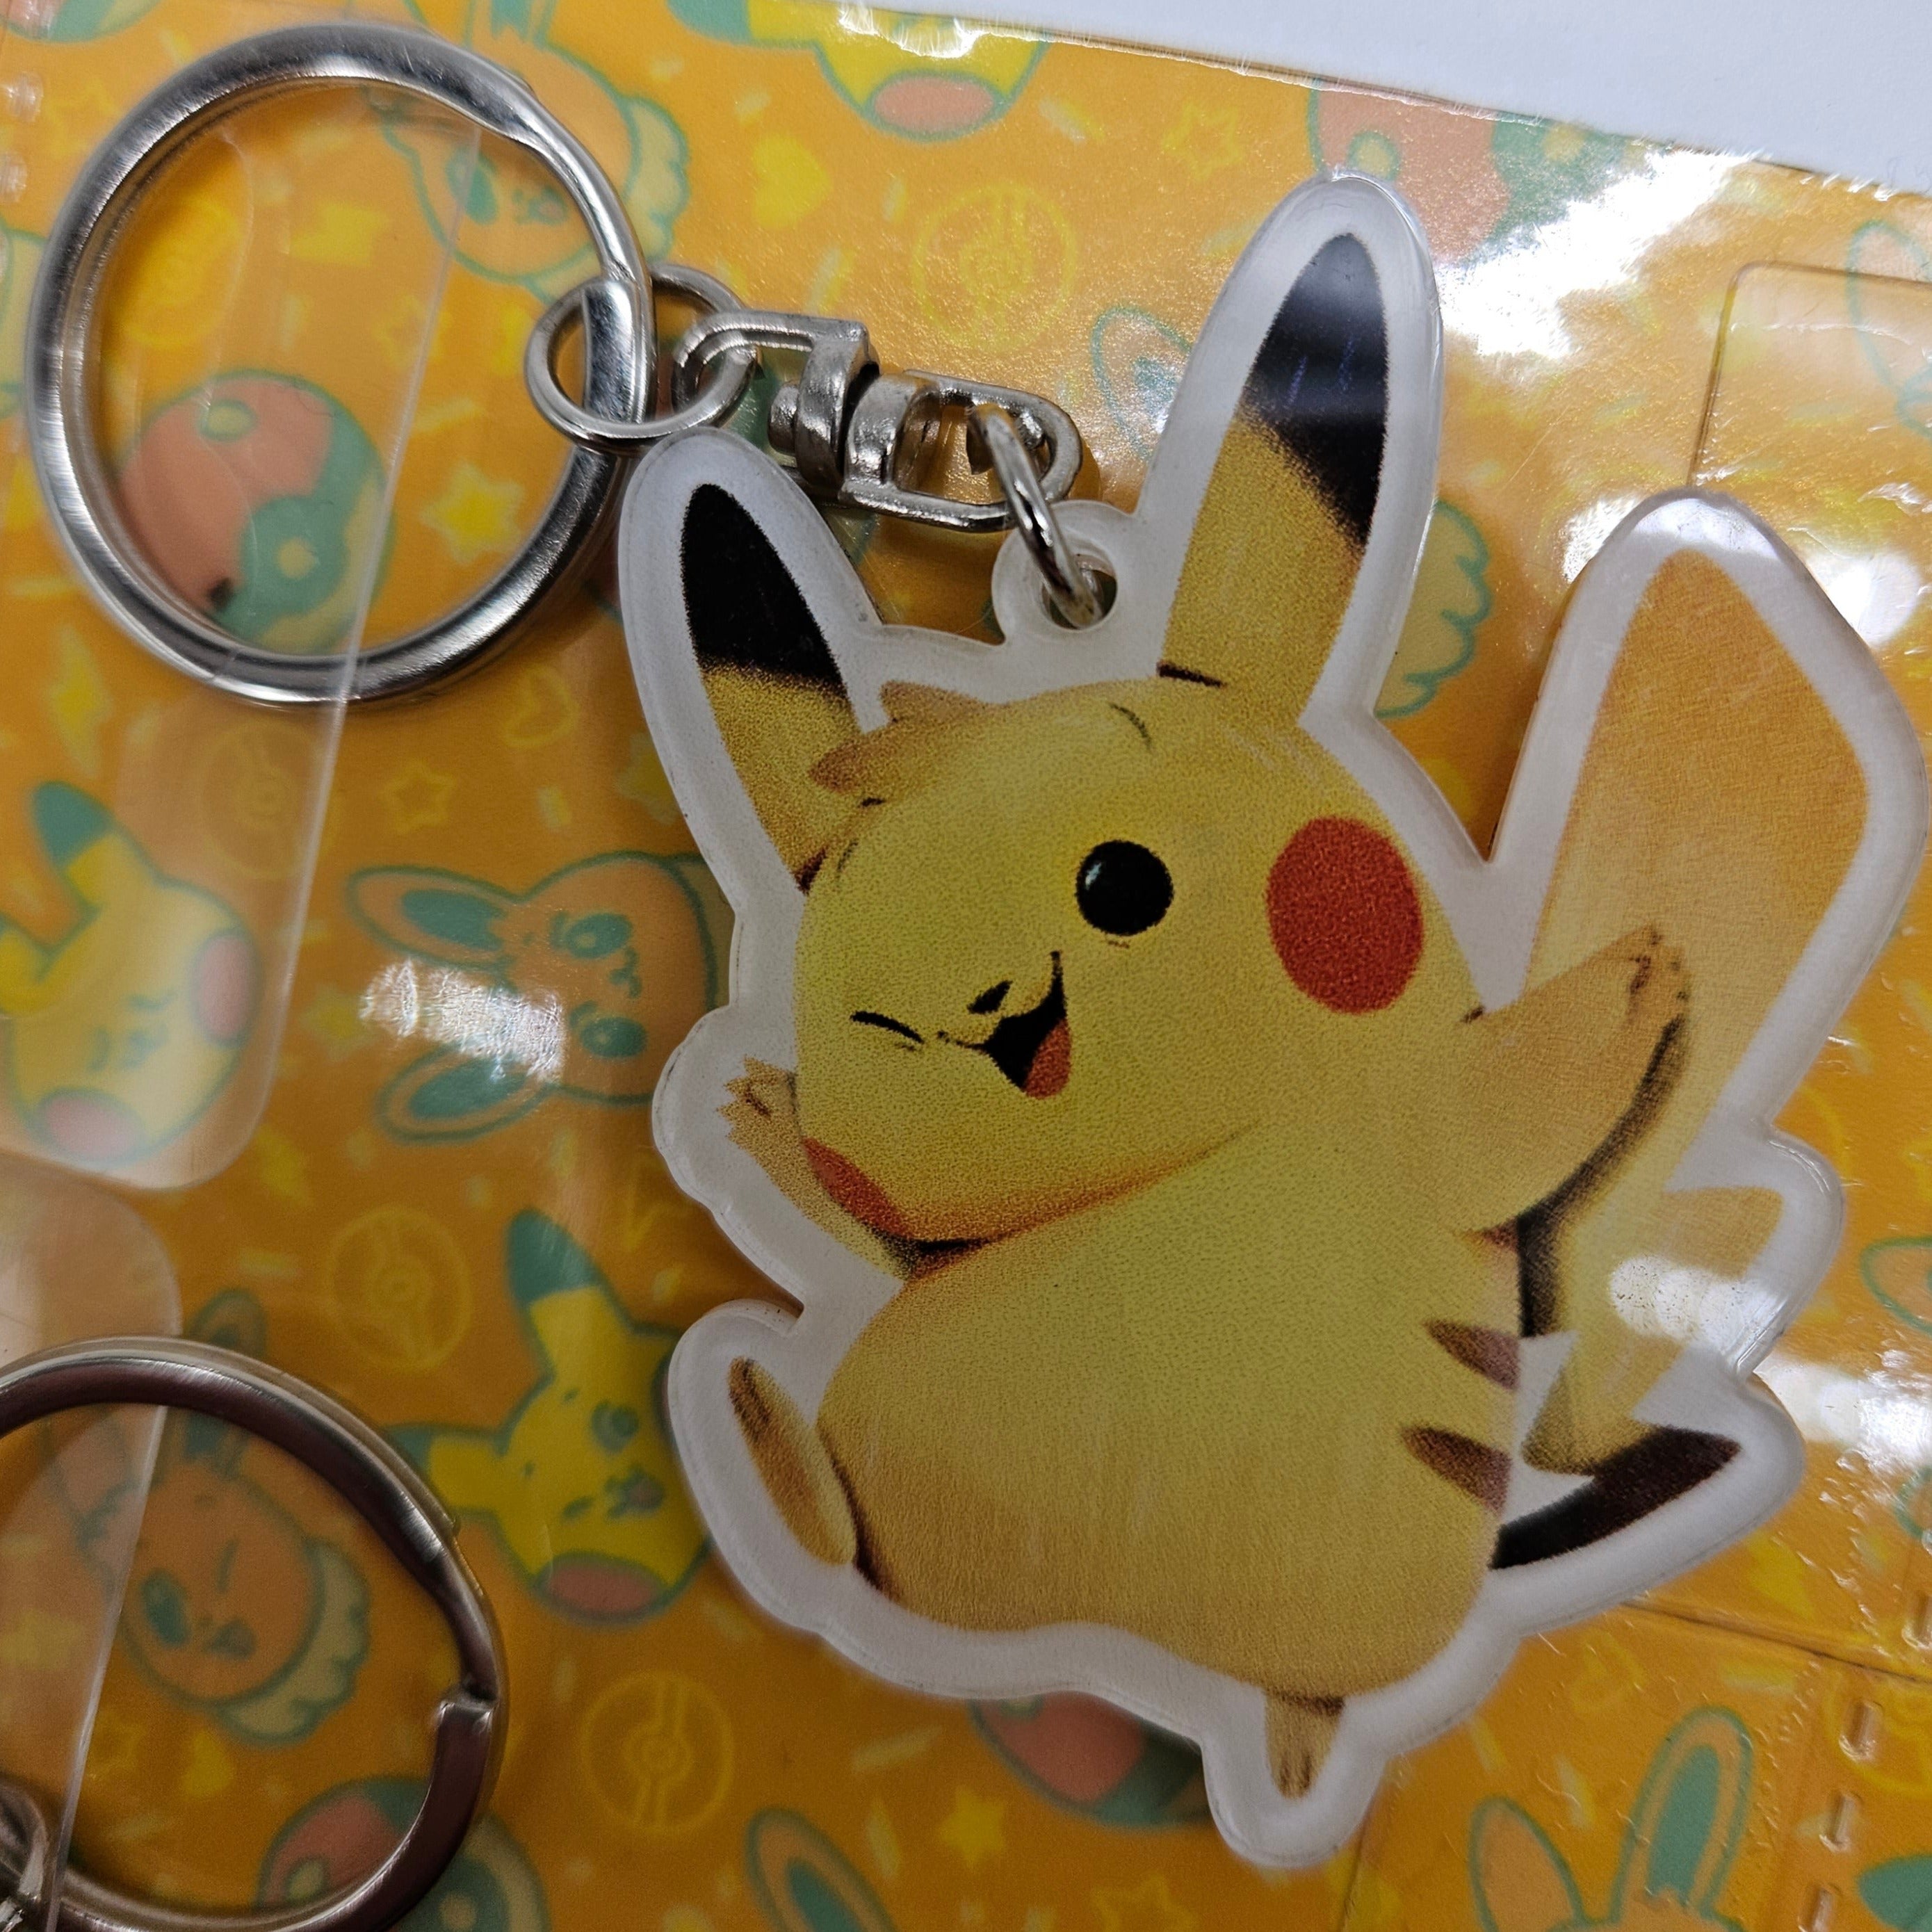 Pikachu (Ditto) Pokemon Keychain